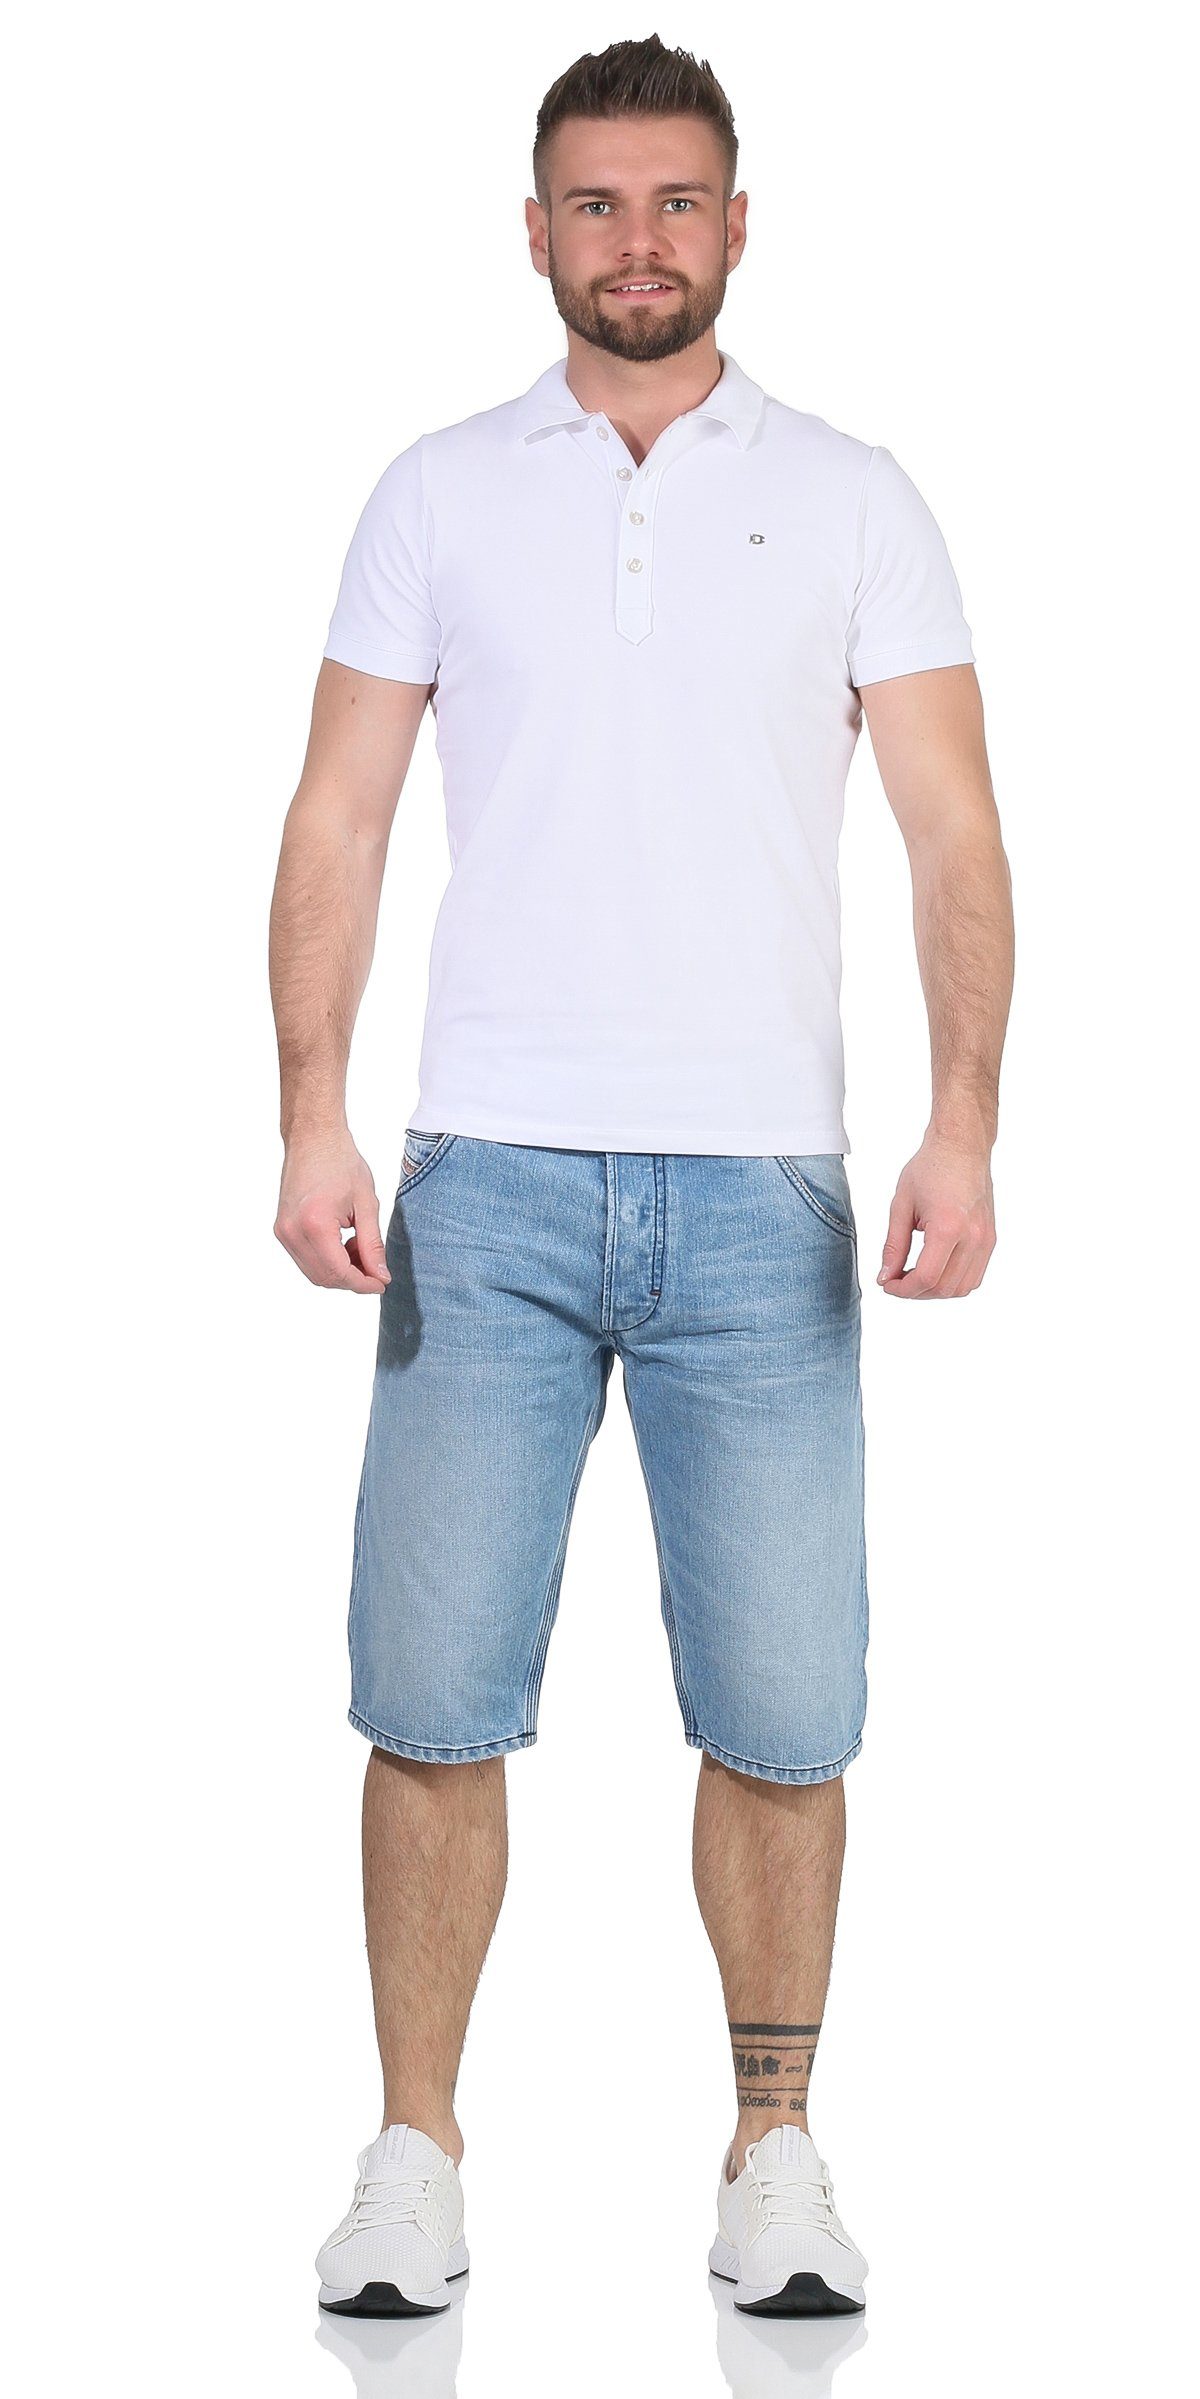 Diesel Jeansshorts Herren Jeans R18K5 Shorts, Hose Kroshort kurze Used-Look Shorts dezenter RG48R Hellblau